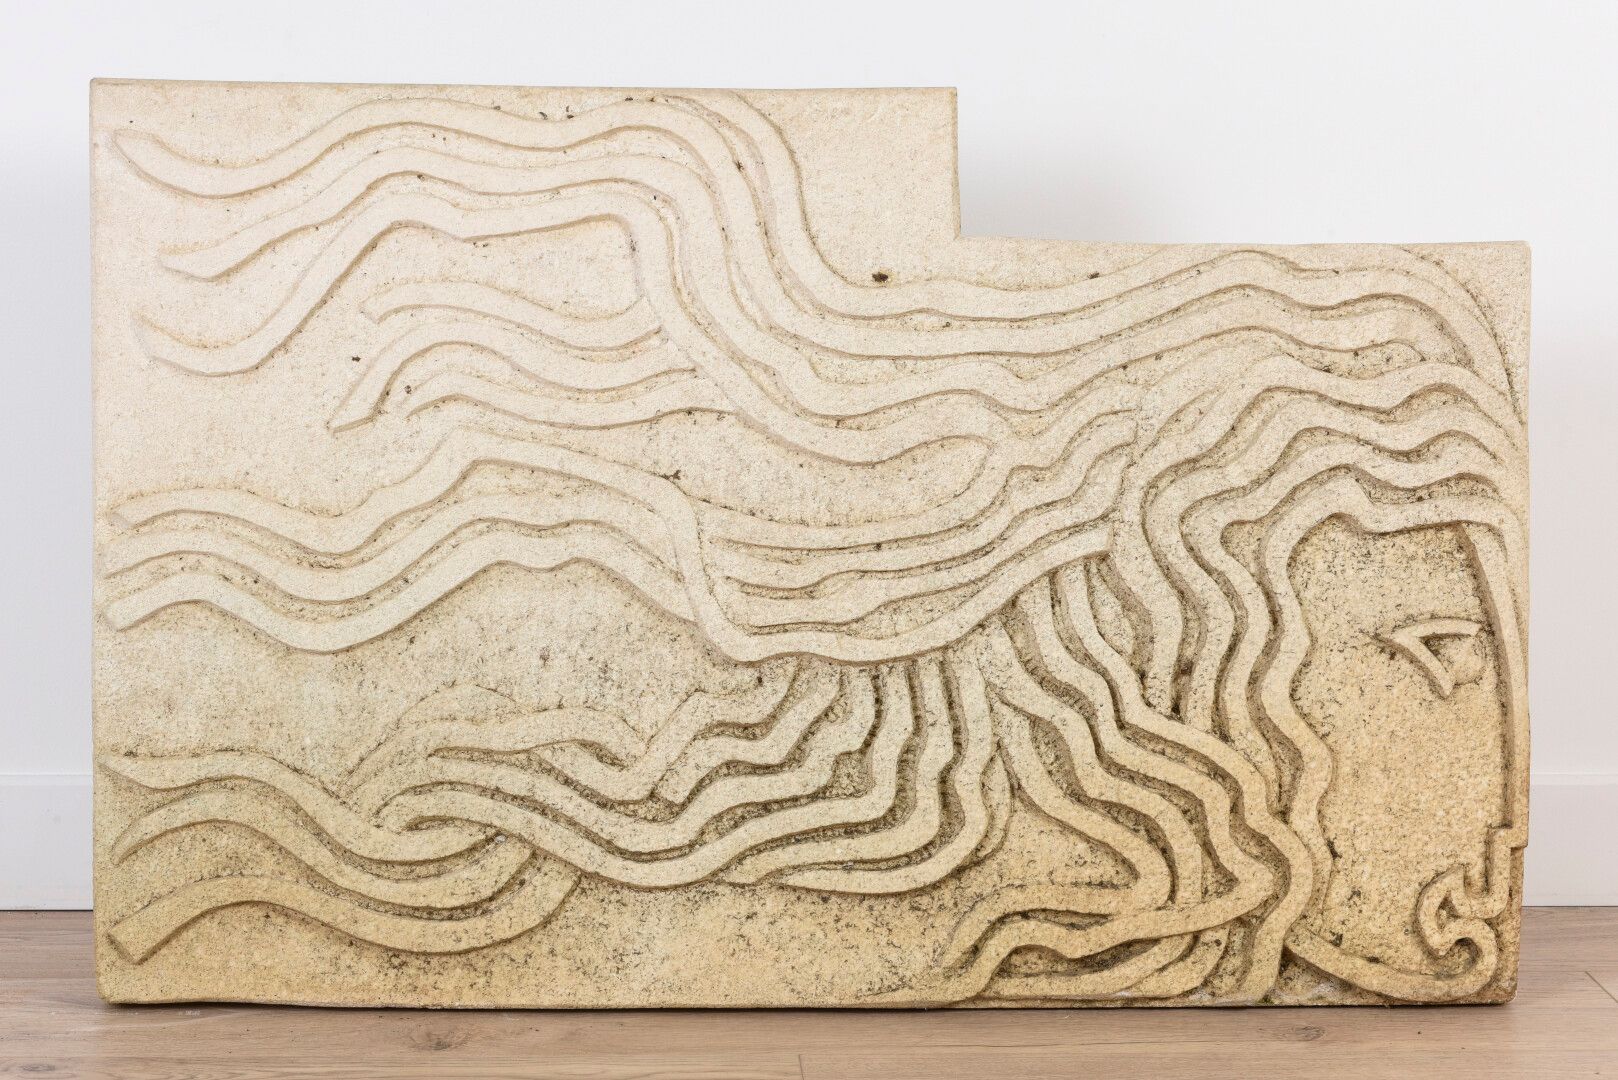 Null 文森特-冈萨雷斯(1928-2019)

Calypso。

石灰石主题。

高：60厘米；宽：96厘米